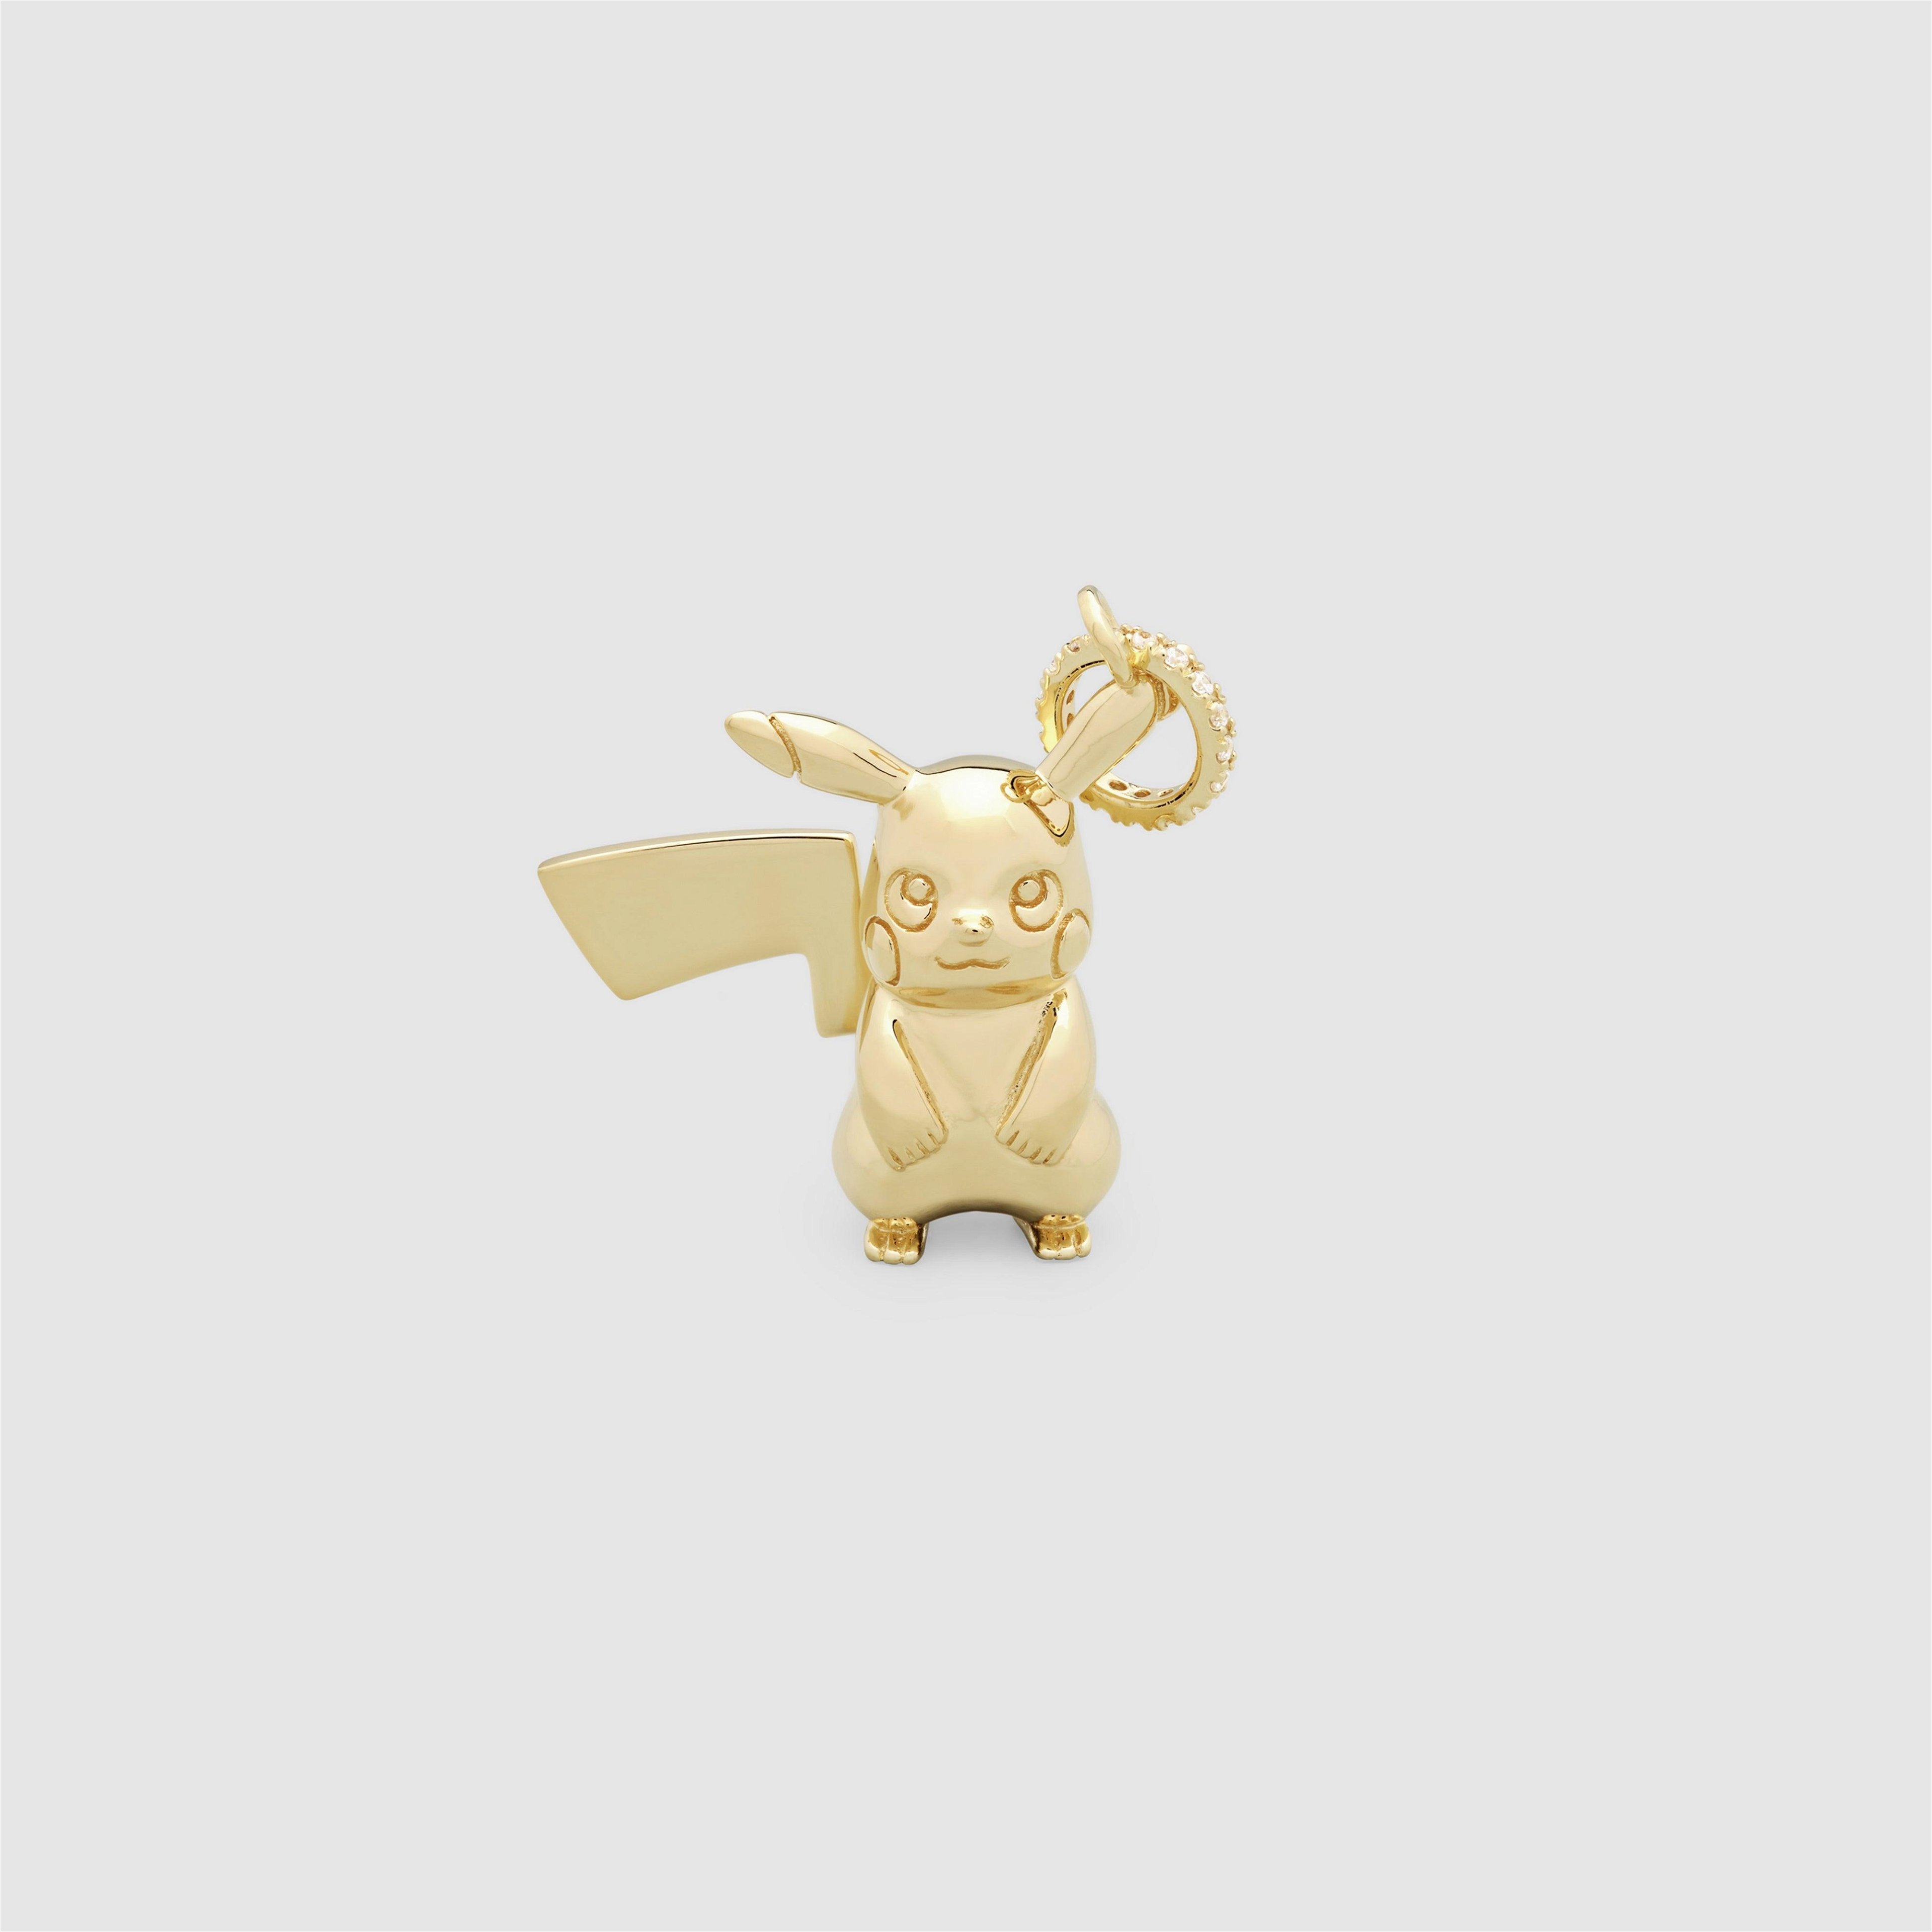 TOM WOOD - Pikachu Shy Gold Charm - (Yellow Gold) by TOM WOOD